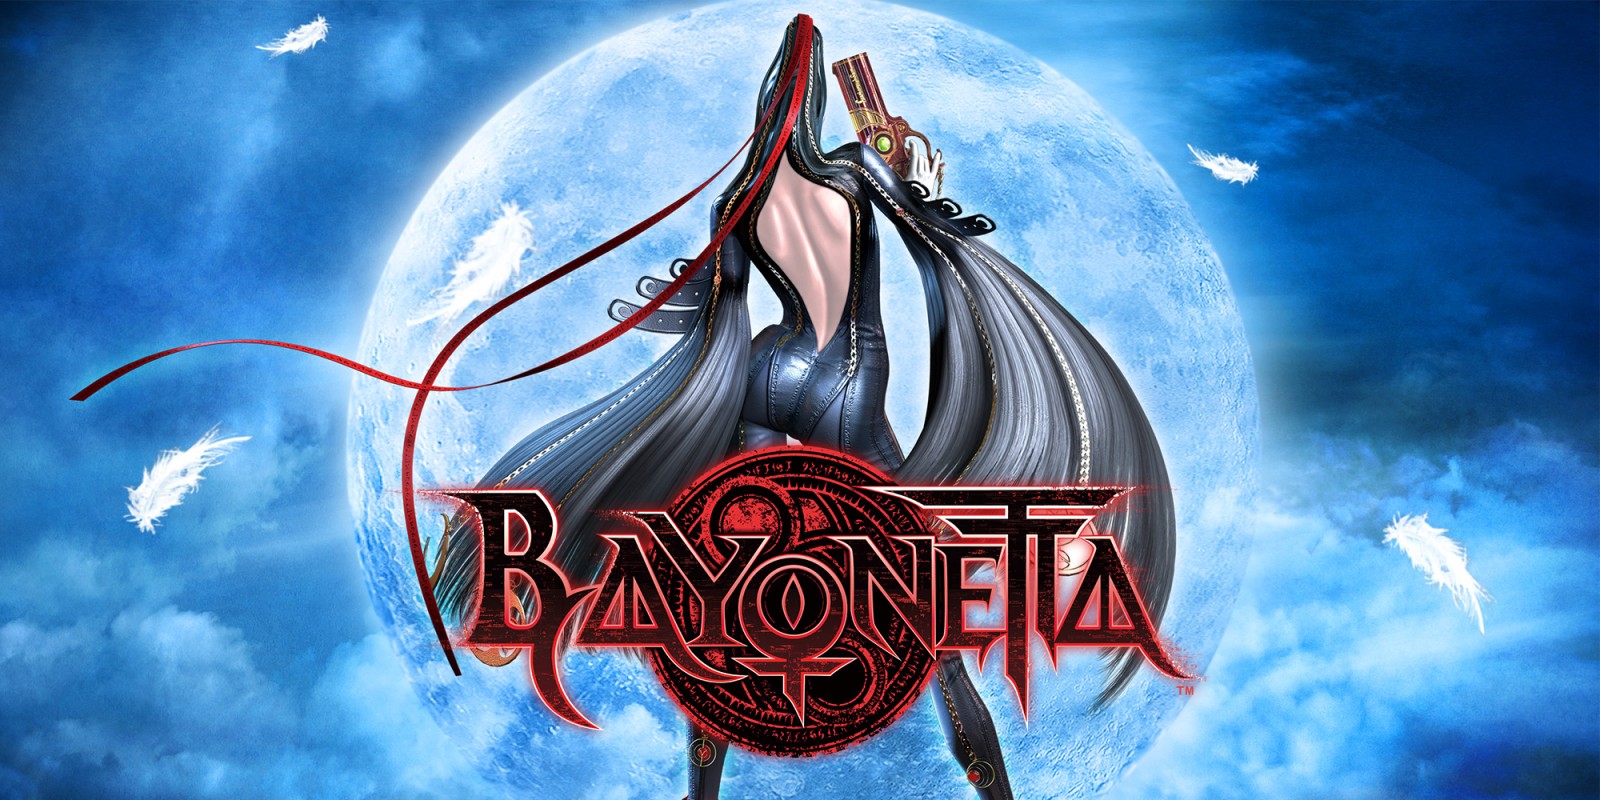 download bayonetta 2 amiibo